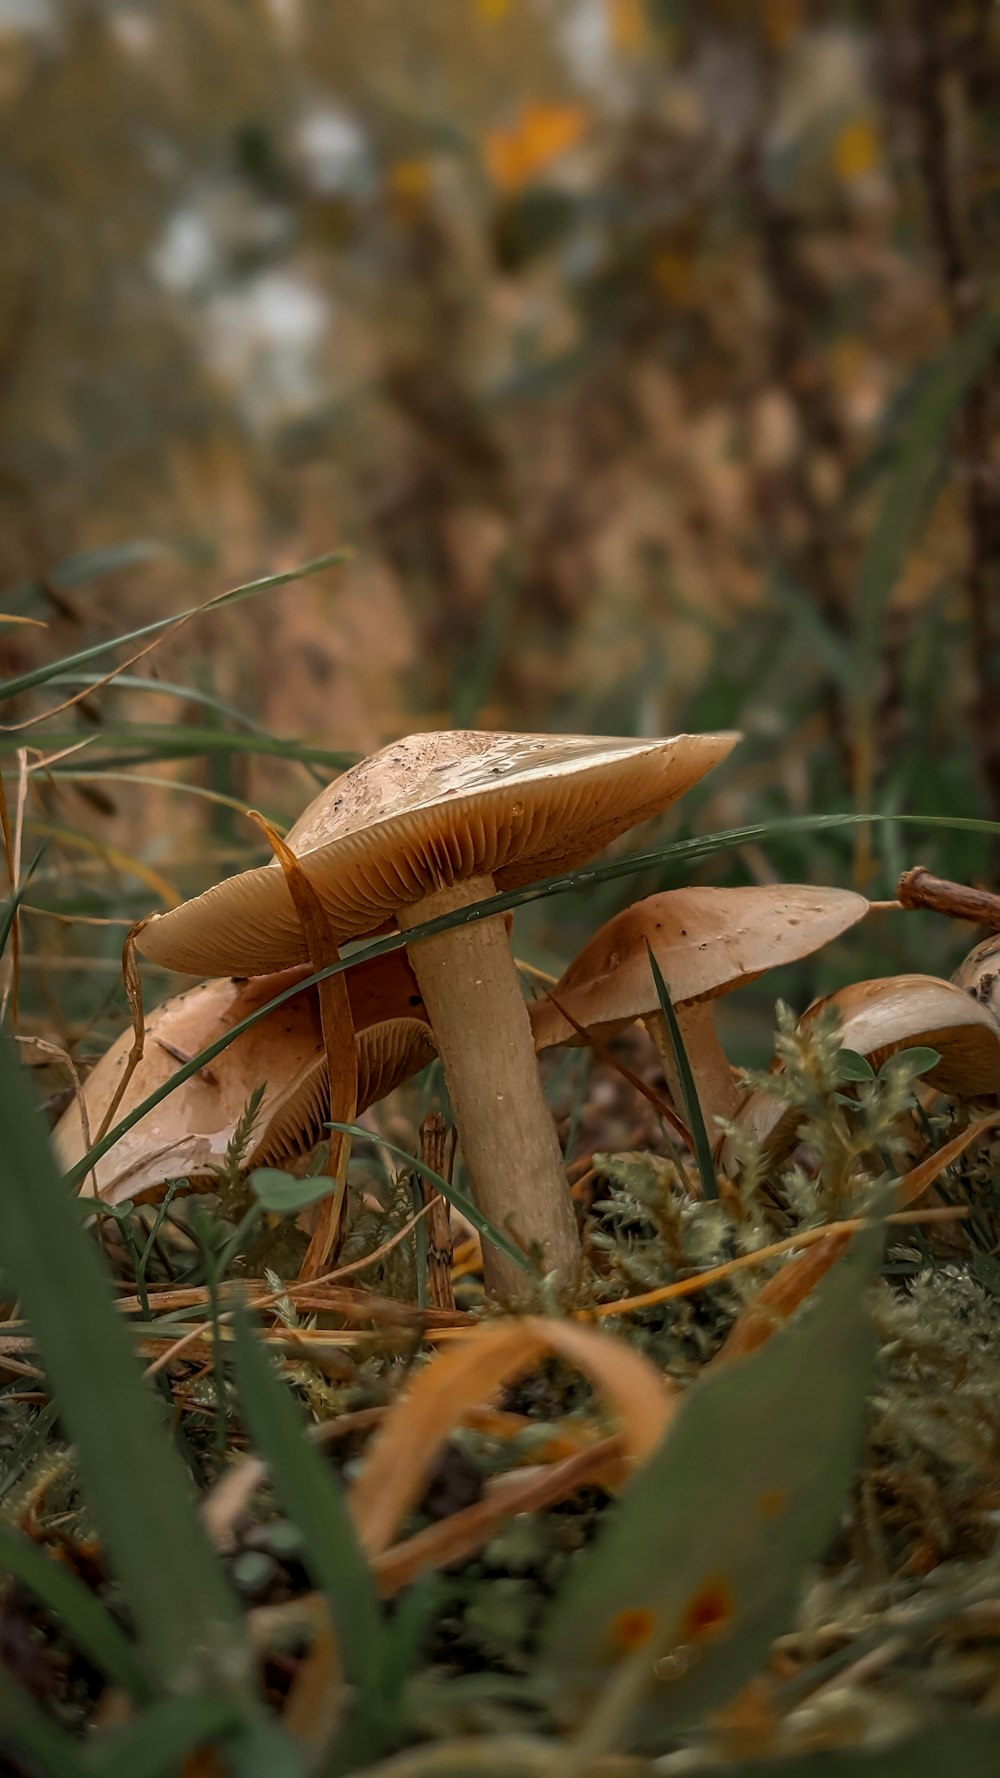 a close up of a mushroom